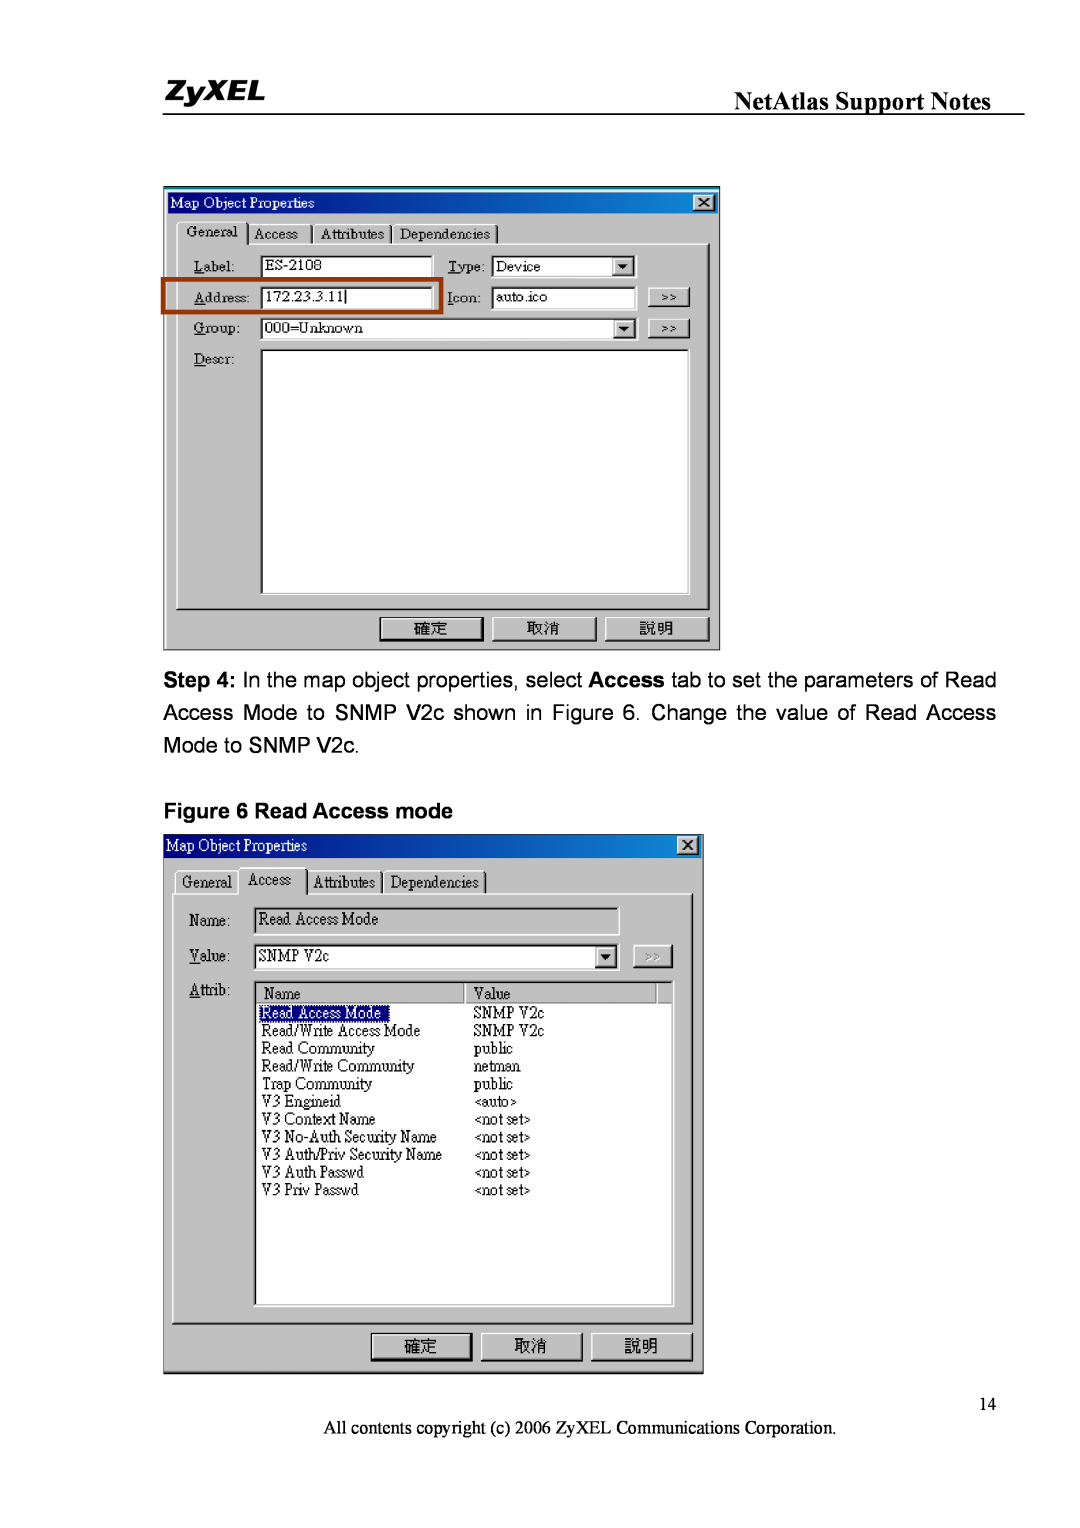 ZyXEL Communications 1 manual Read Access mode, NetAtlas Support Notes 